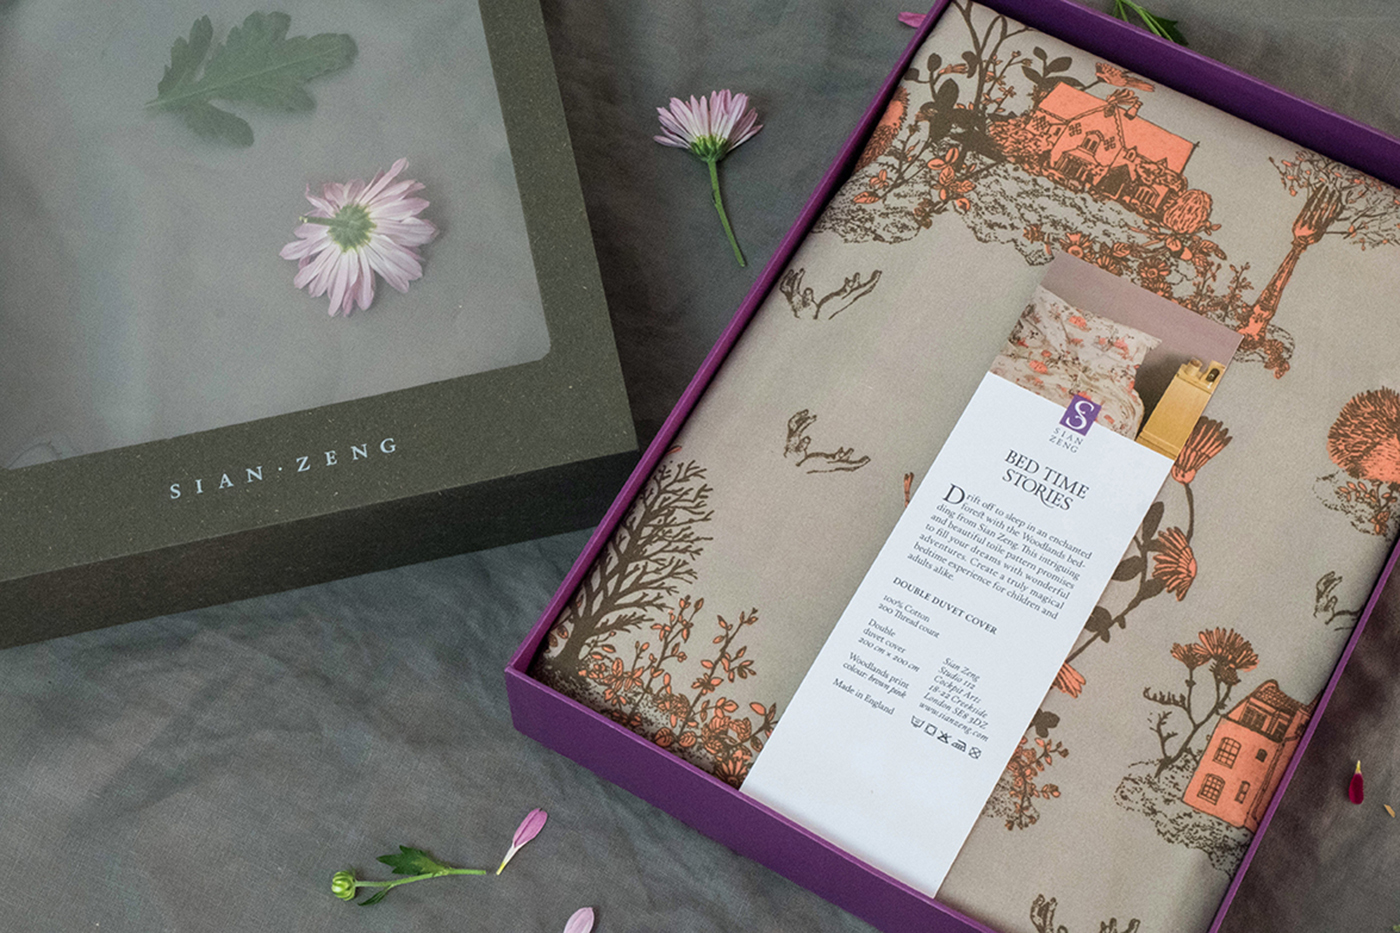 sian levente toth package design box bold luxury high end typo grey bedlinen logo ZENG 